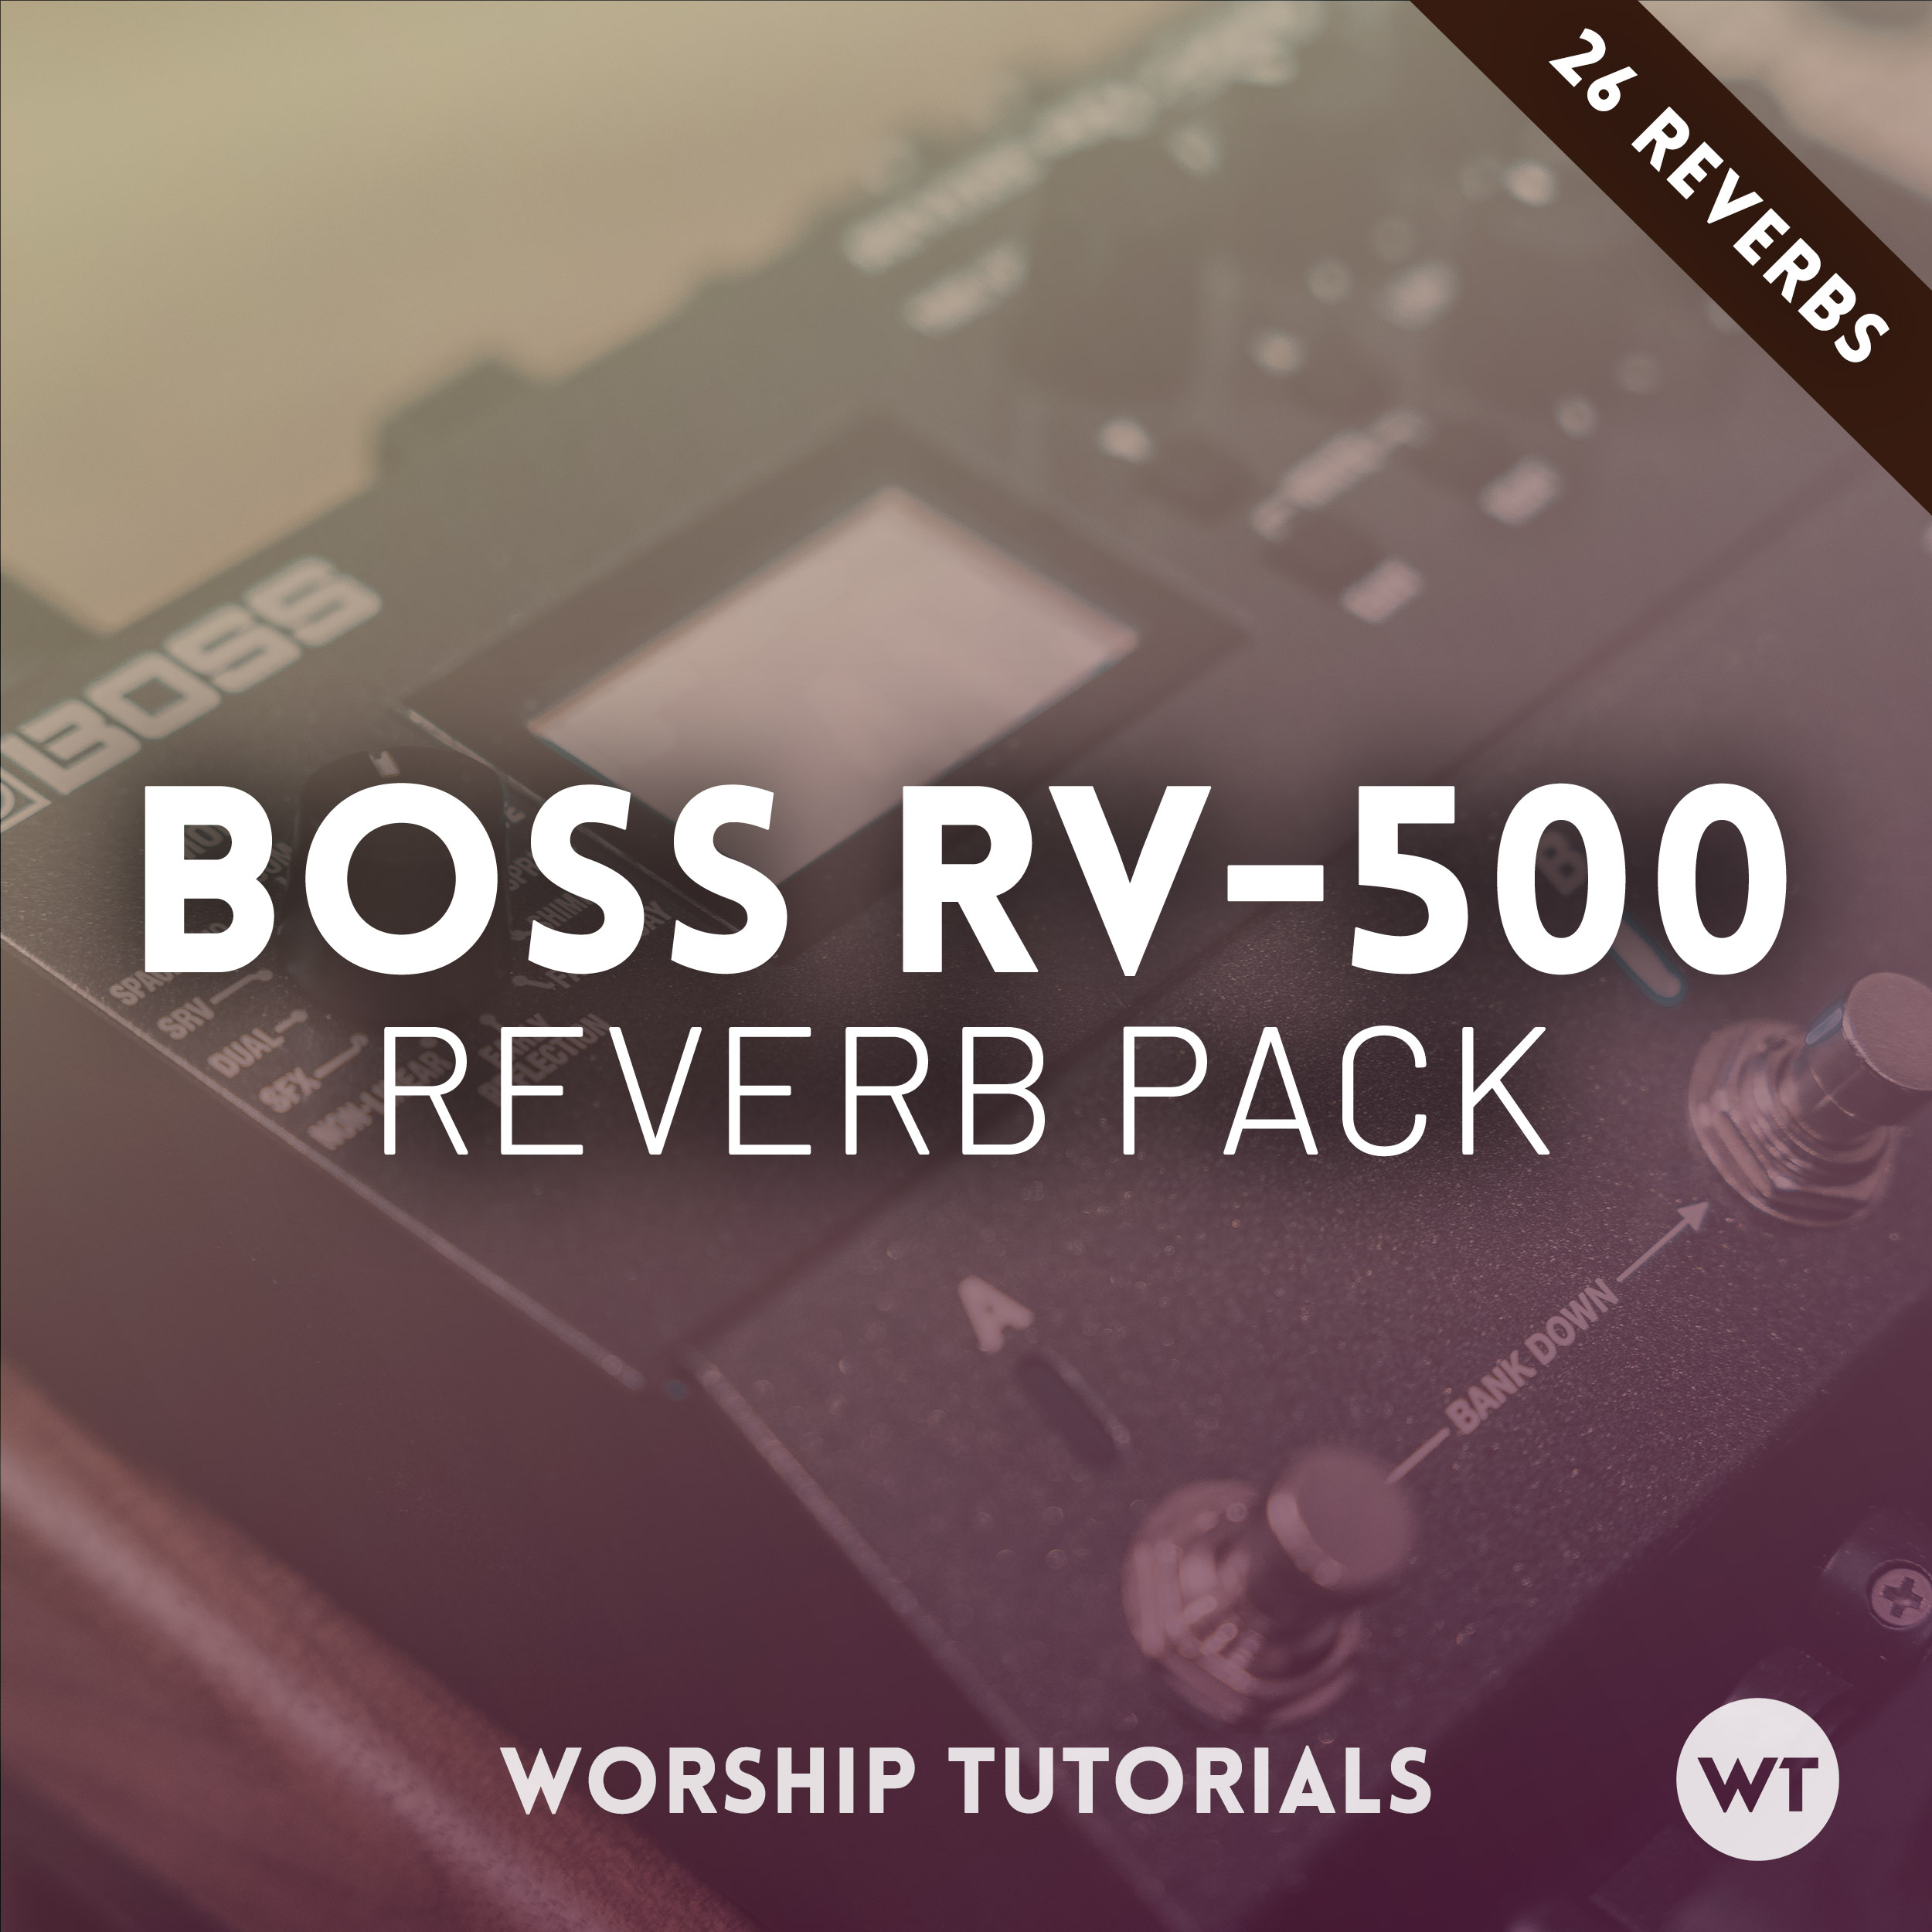 BOSS RV-500 Reverb Pack - Worship